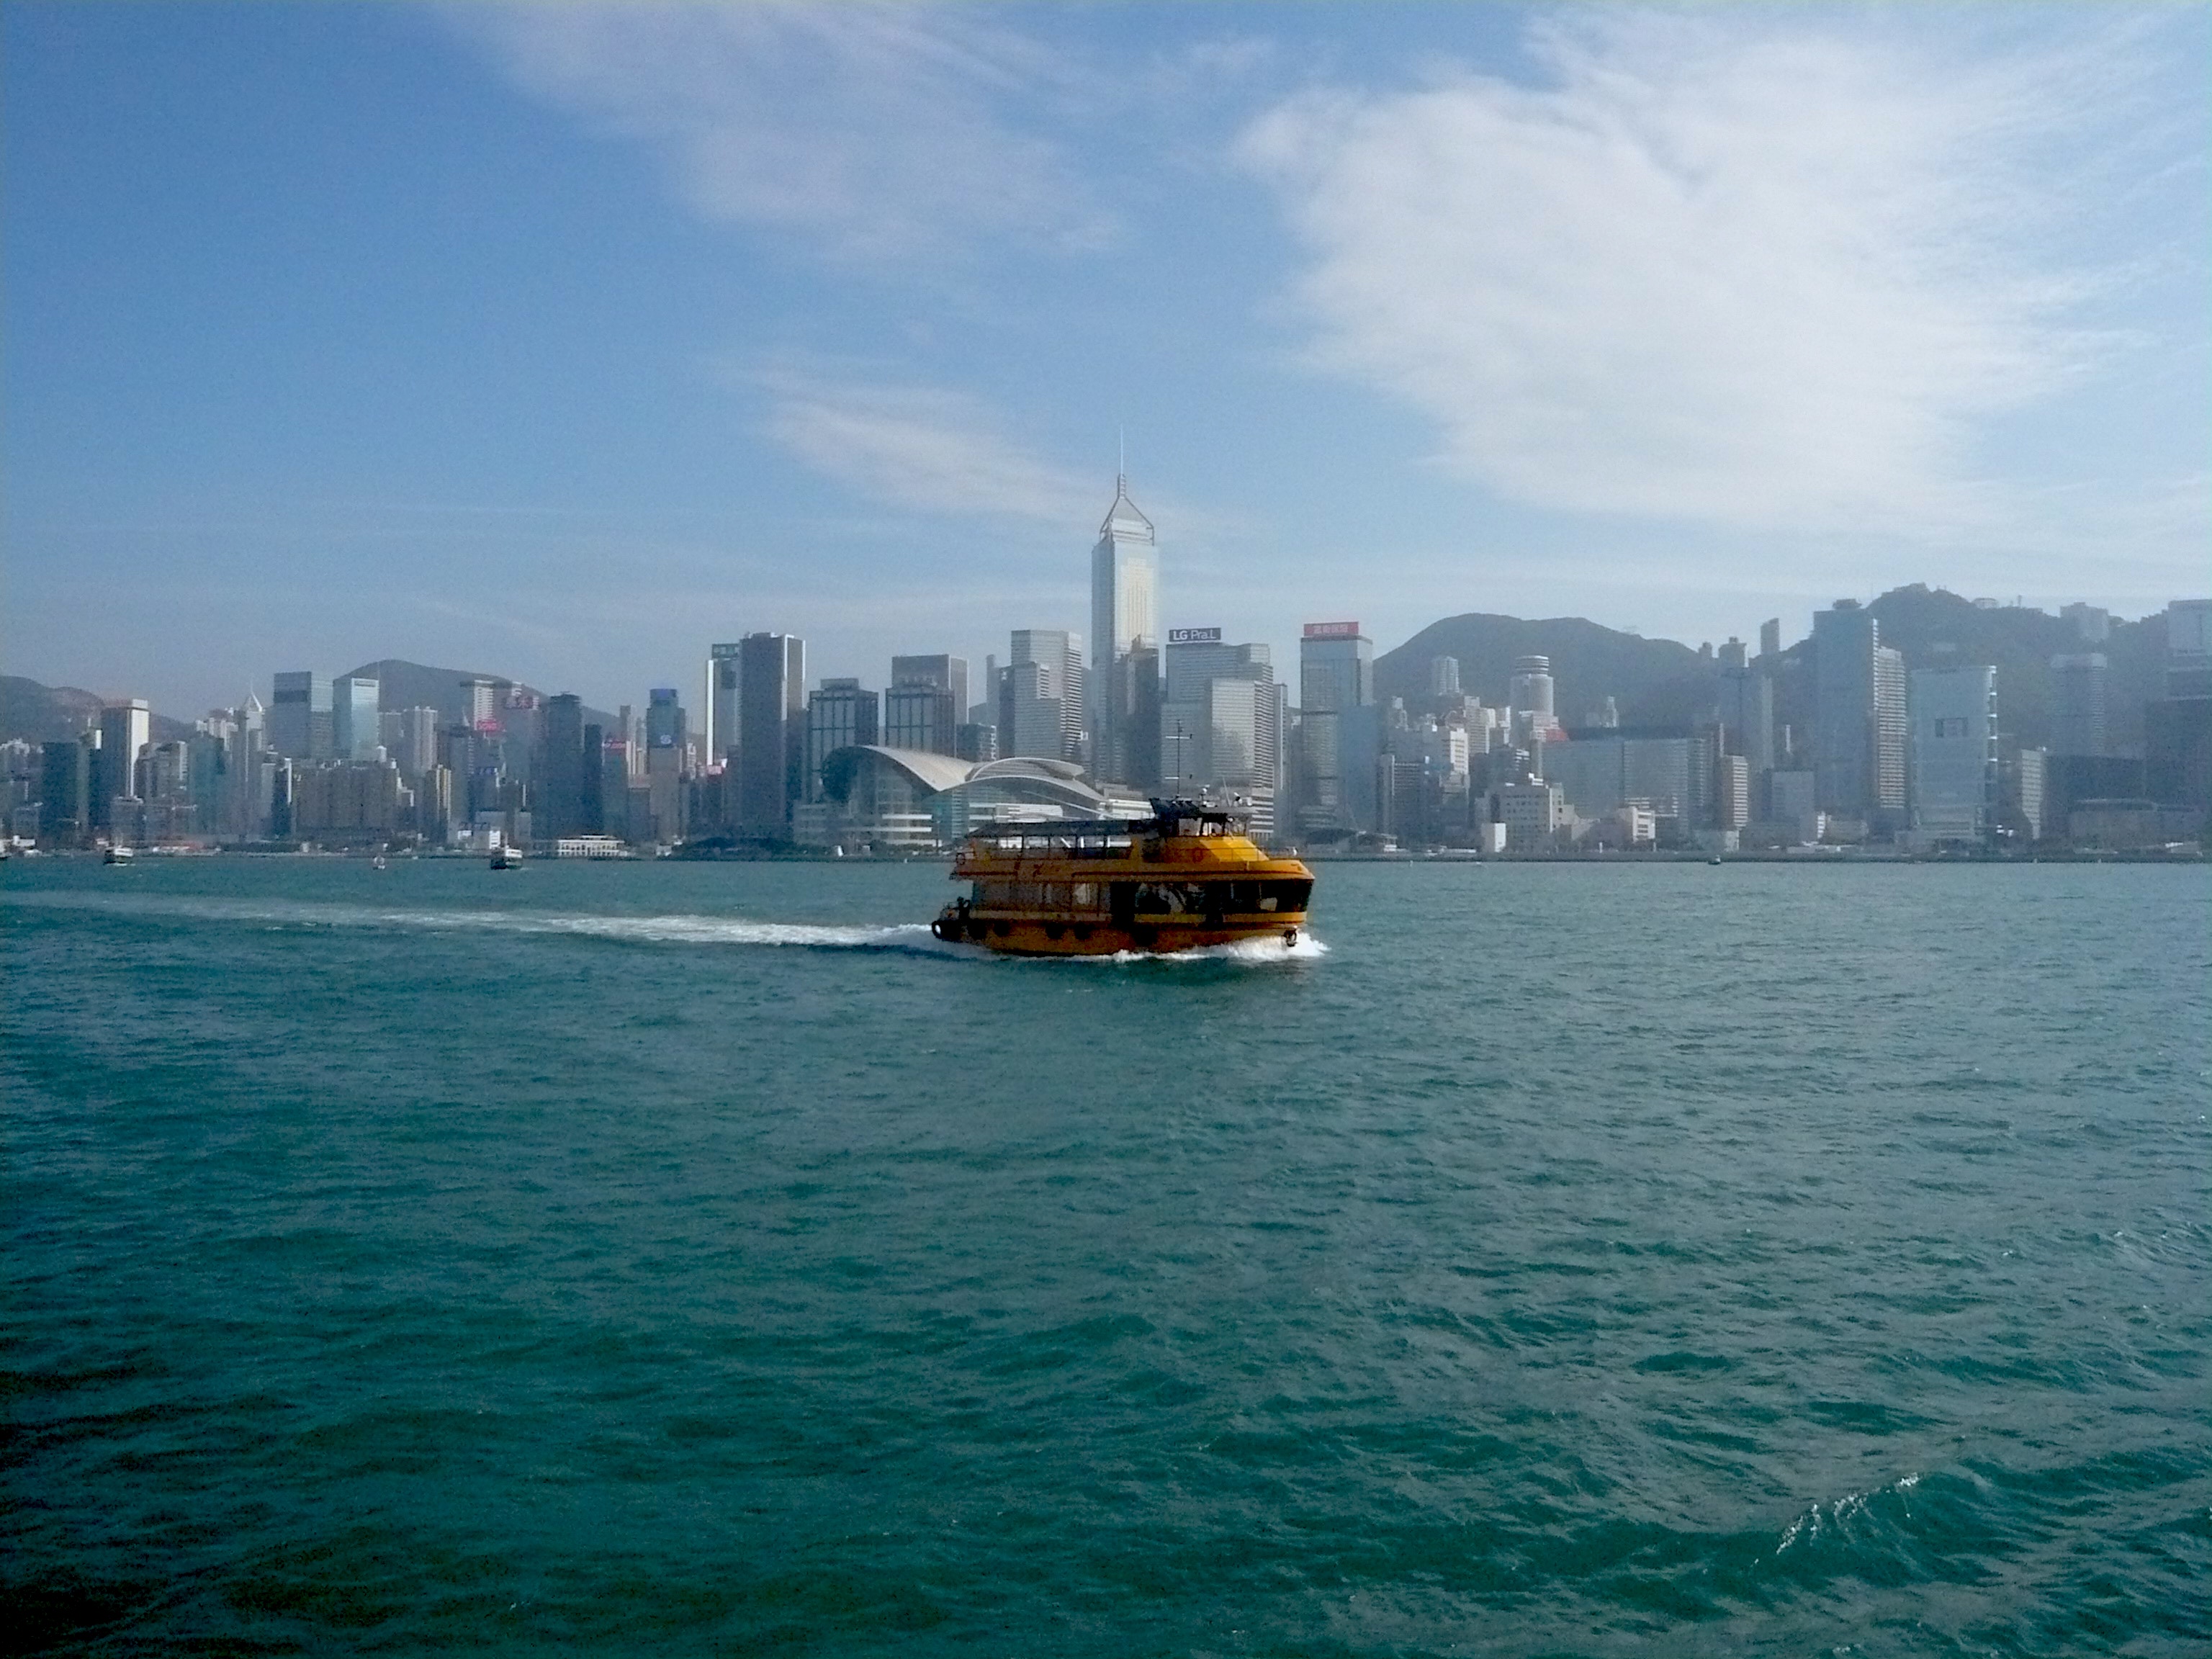 HK Star Ferry